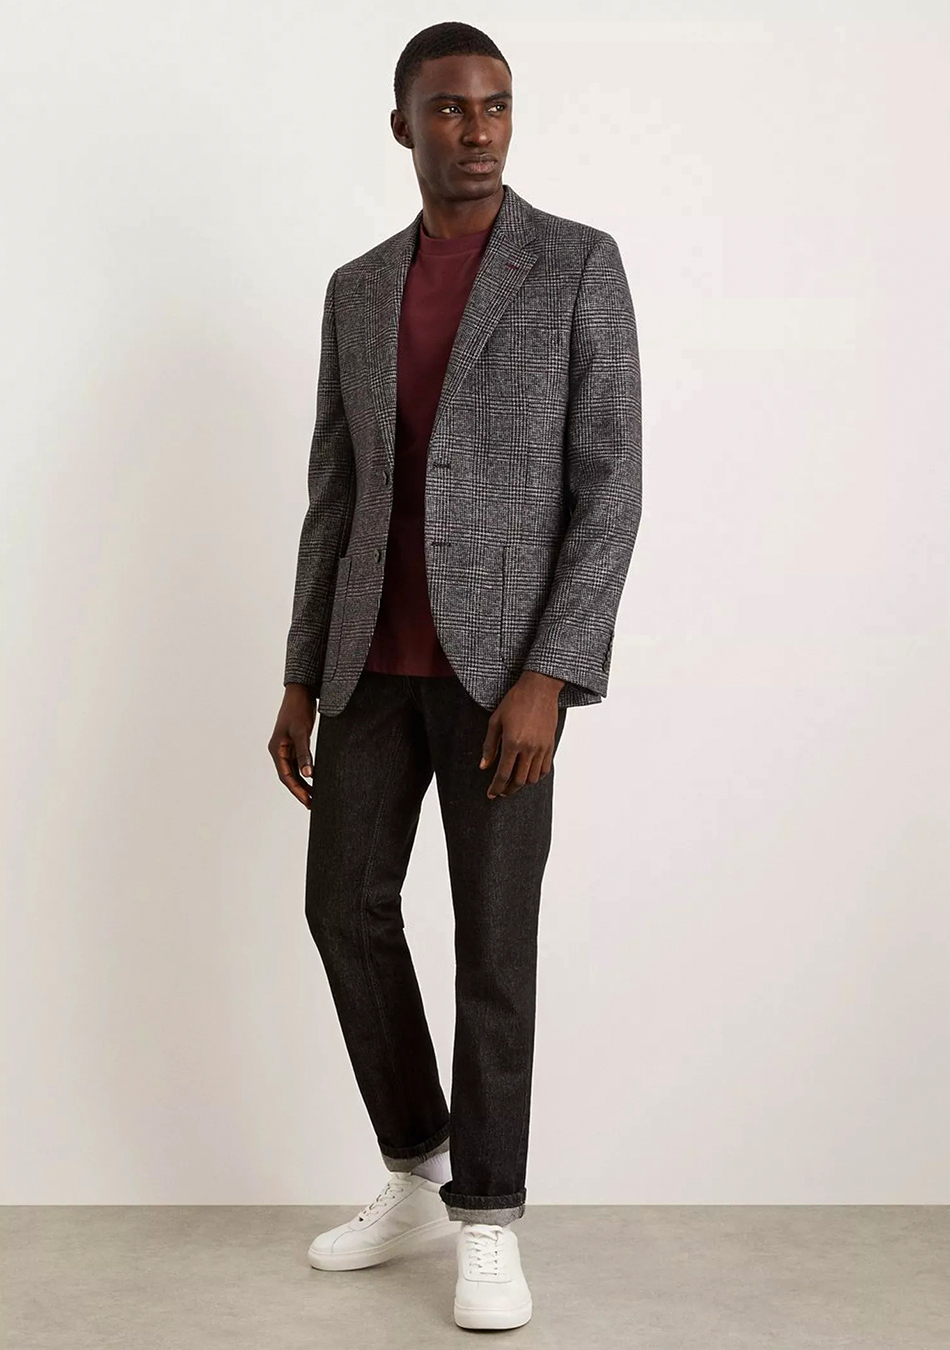 JELTONEWIN Latest Designs Burgundy Jacket Pants Black Vest Groom Wear Men  Suits For Wedding Party Custom Made 3 Pieces Tuxedo - AliExpress